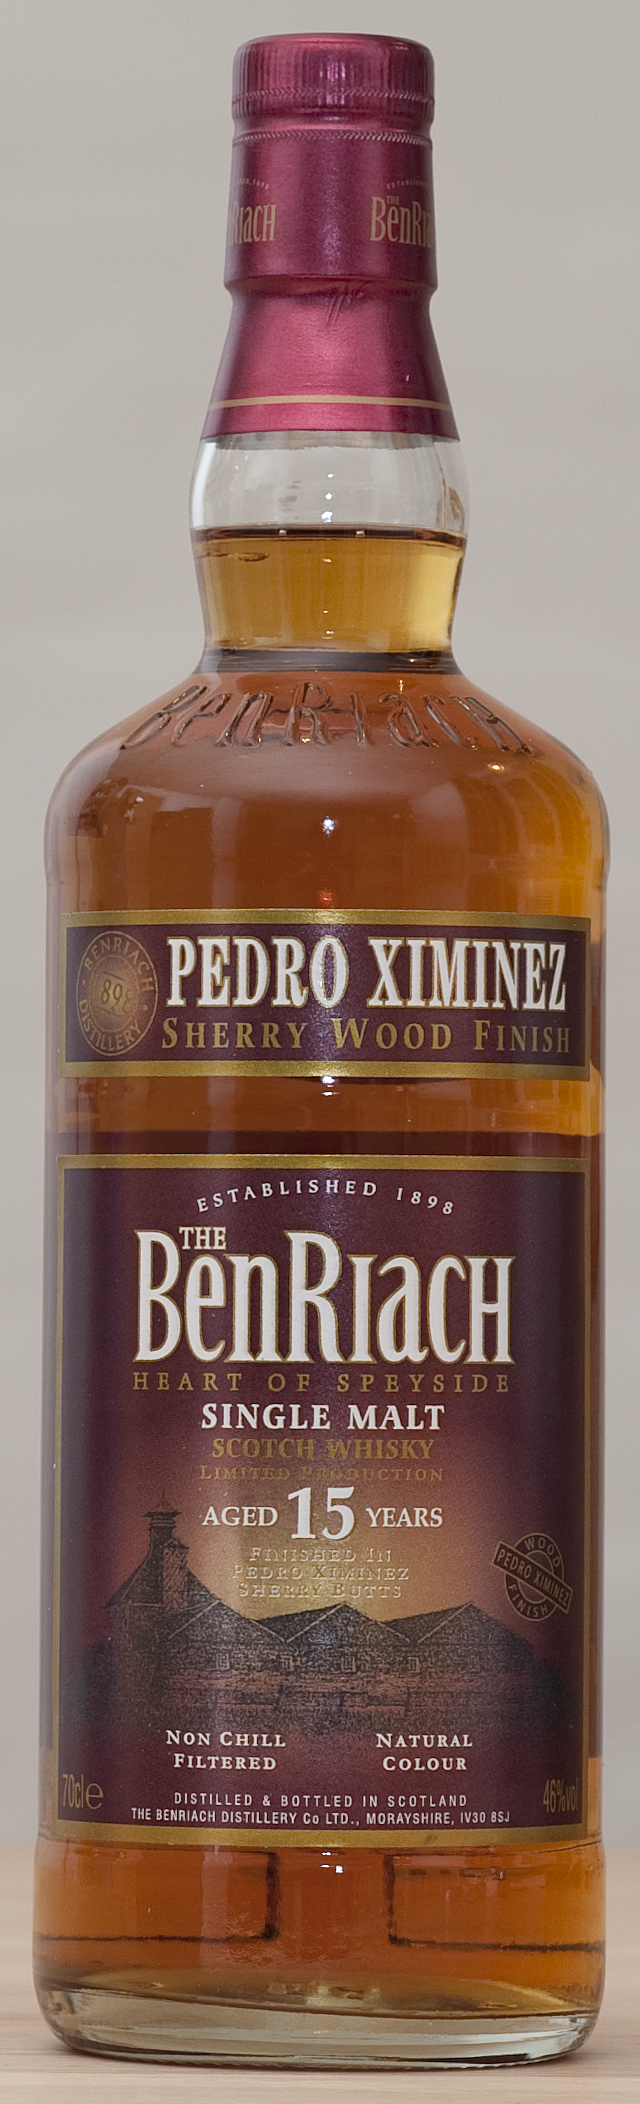 Billede: benriach 15 px sheery wood finish.jpg